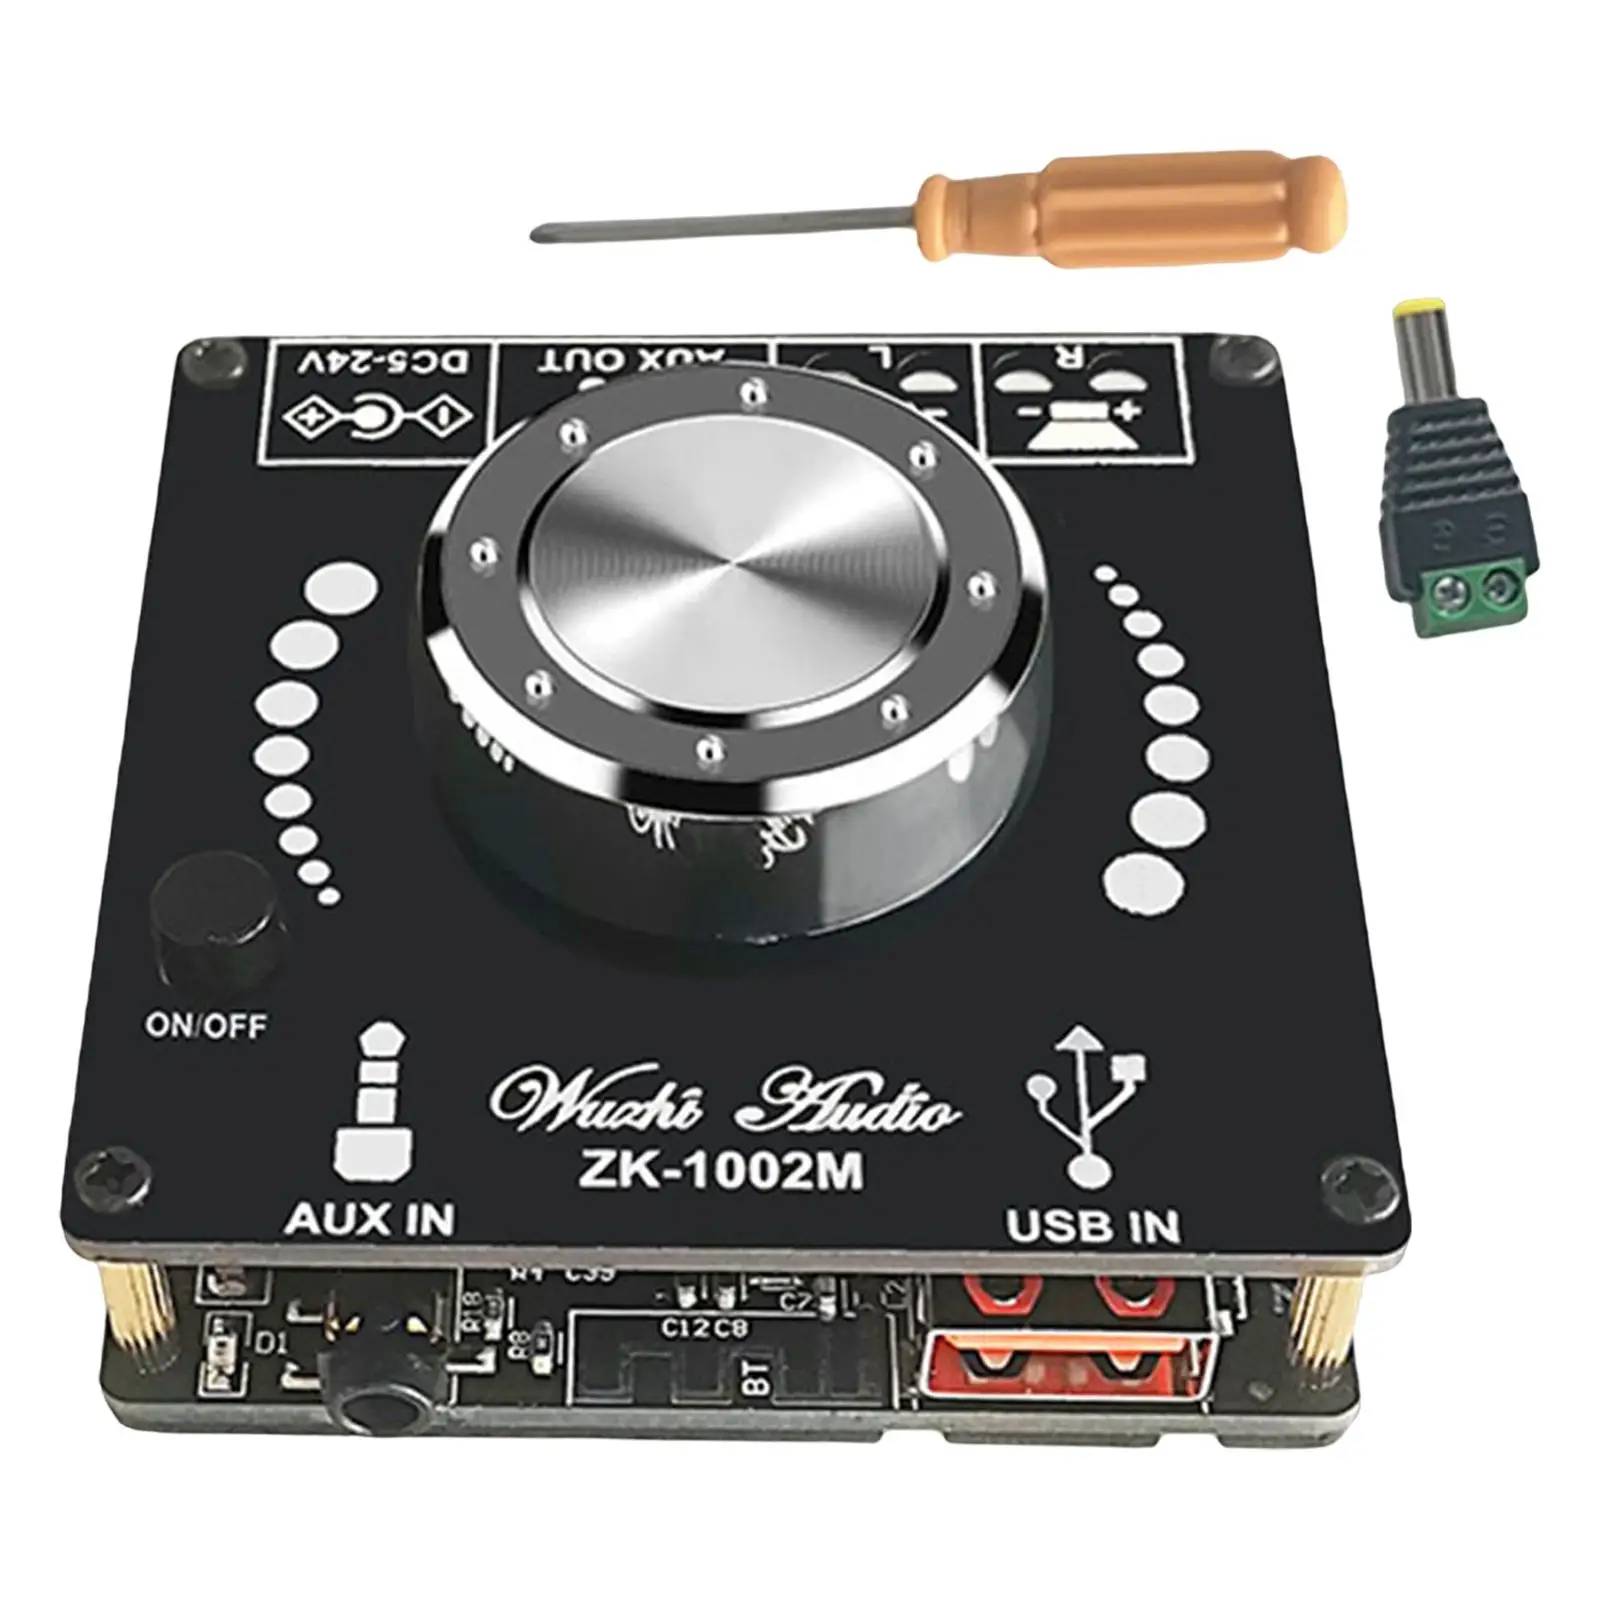 Zk-1002M Power Audio Amplifier Board 2x100W 2 Channel Amplificador Amp Mini Amplifier Board for Home Theater Speakers